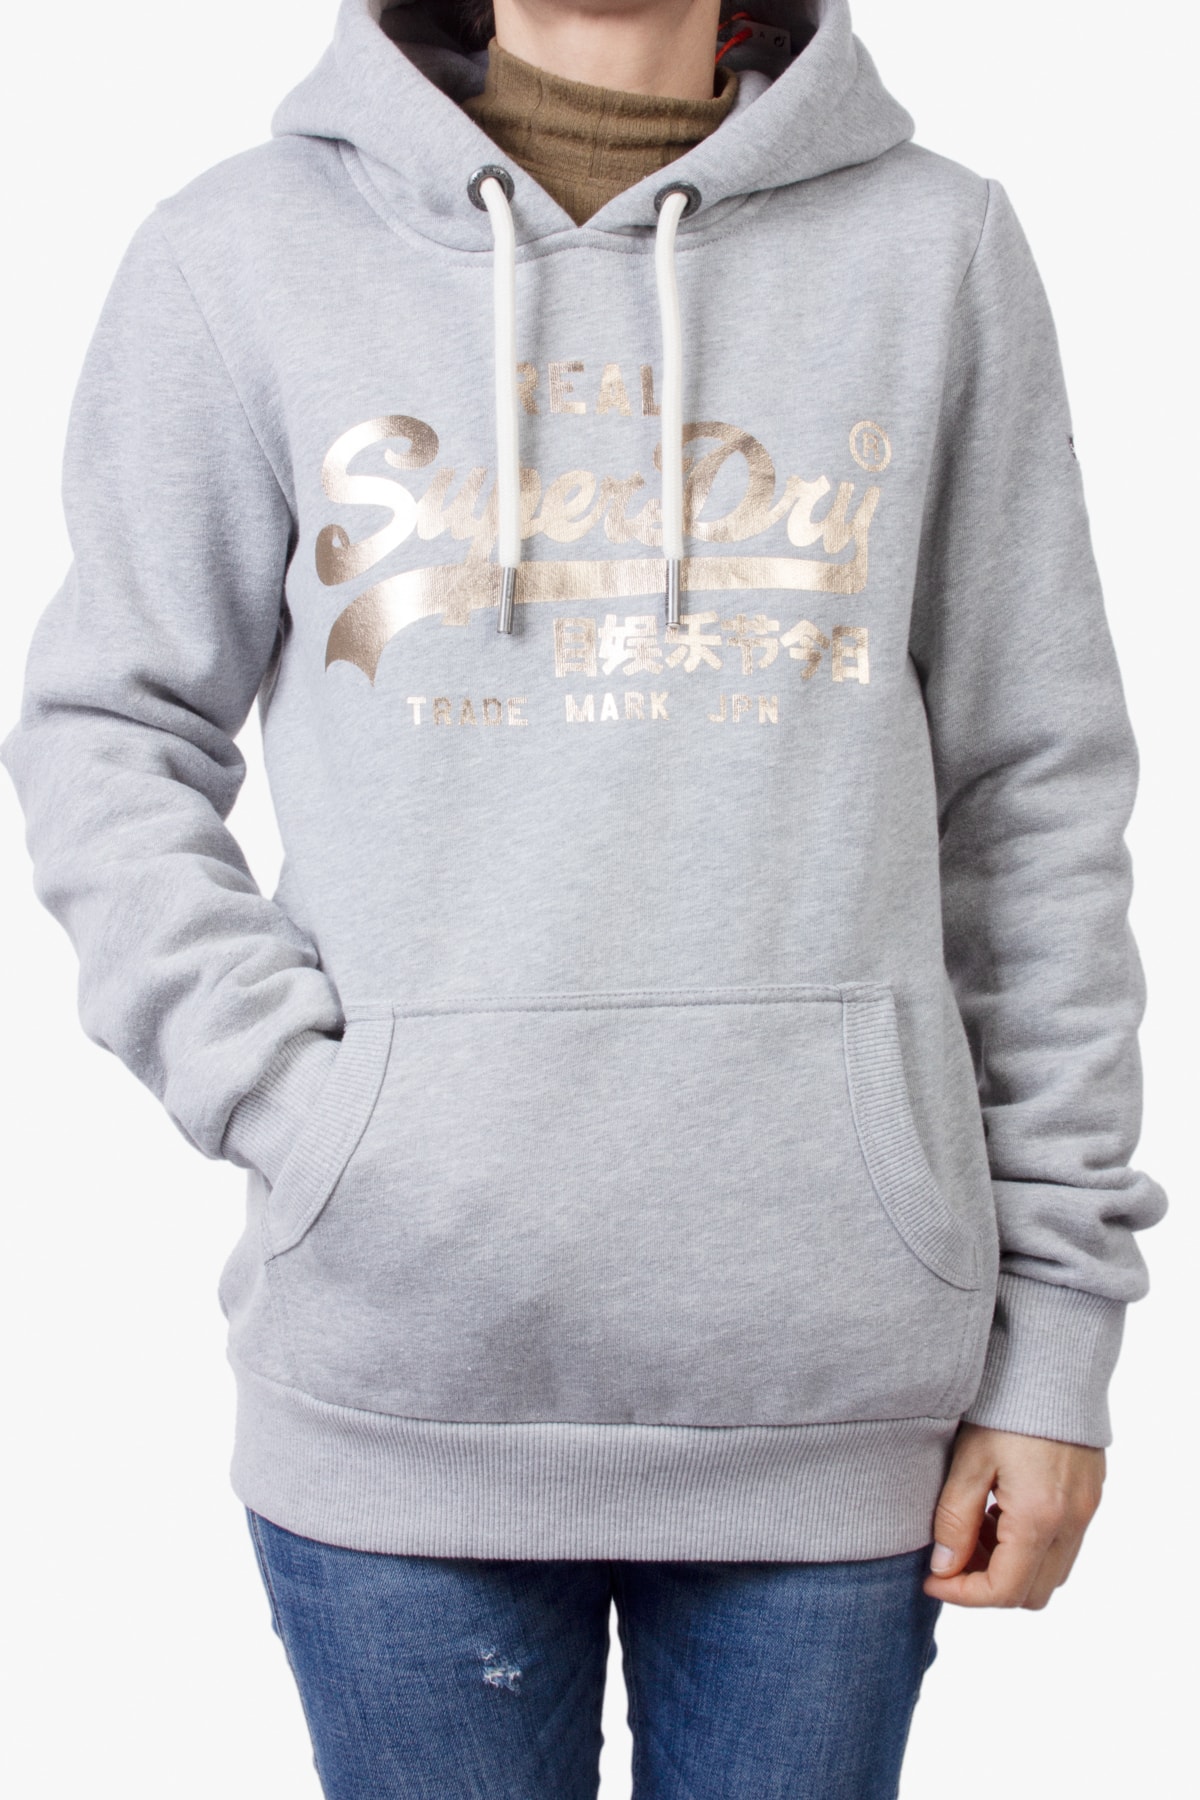 SUPERDRY Sweatshirt Grau Regular Fit Fast ausverkauft